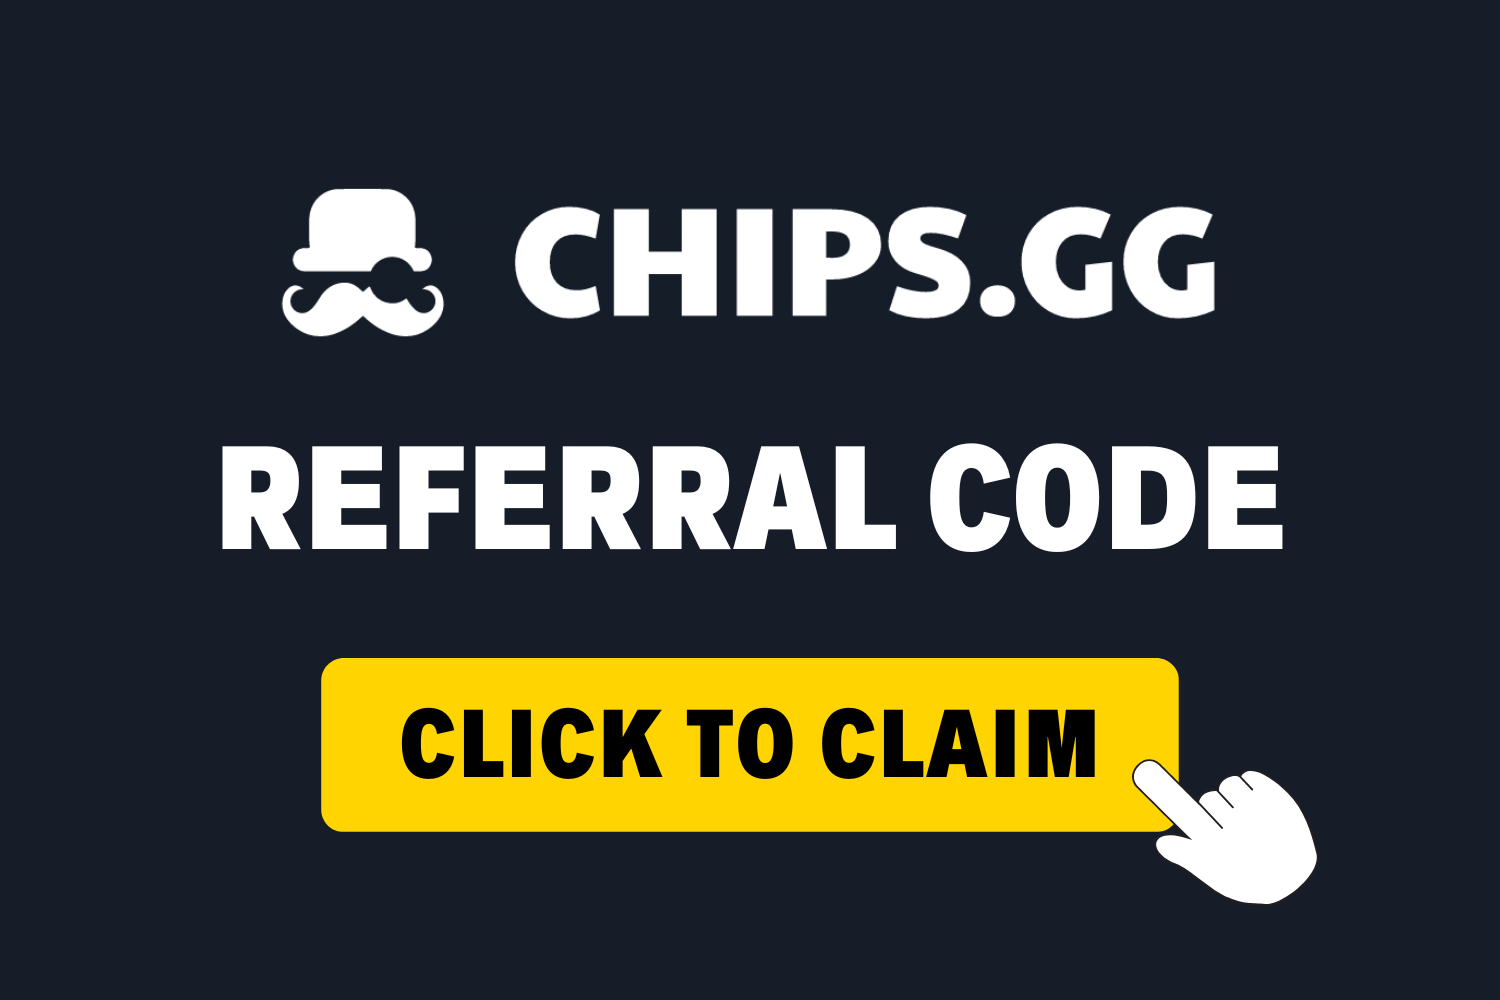 Chips.gg Referral Code